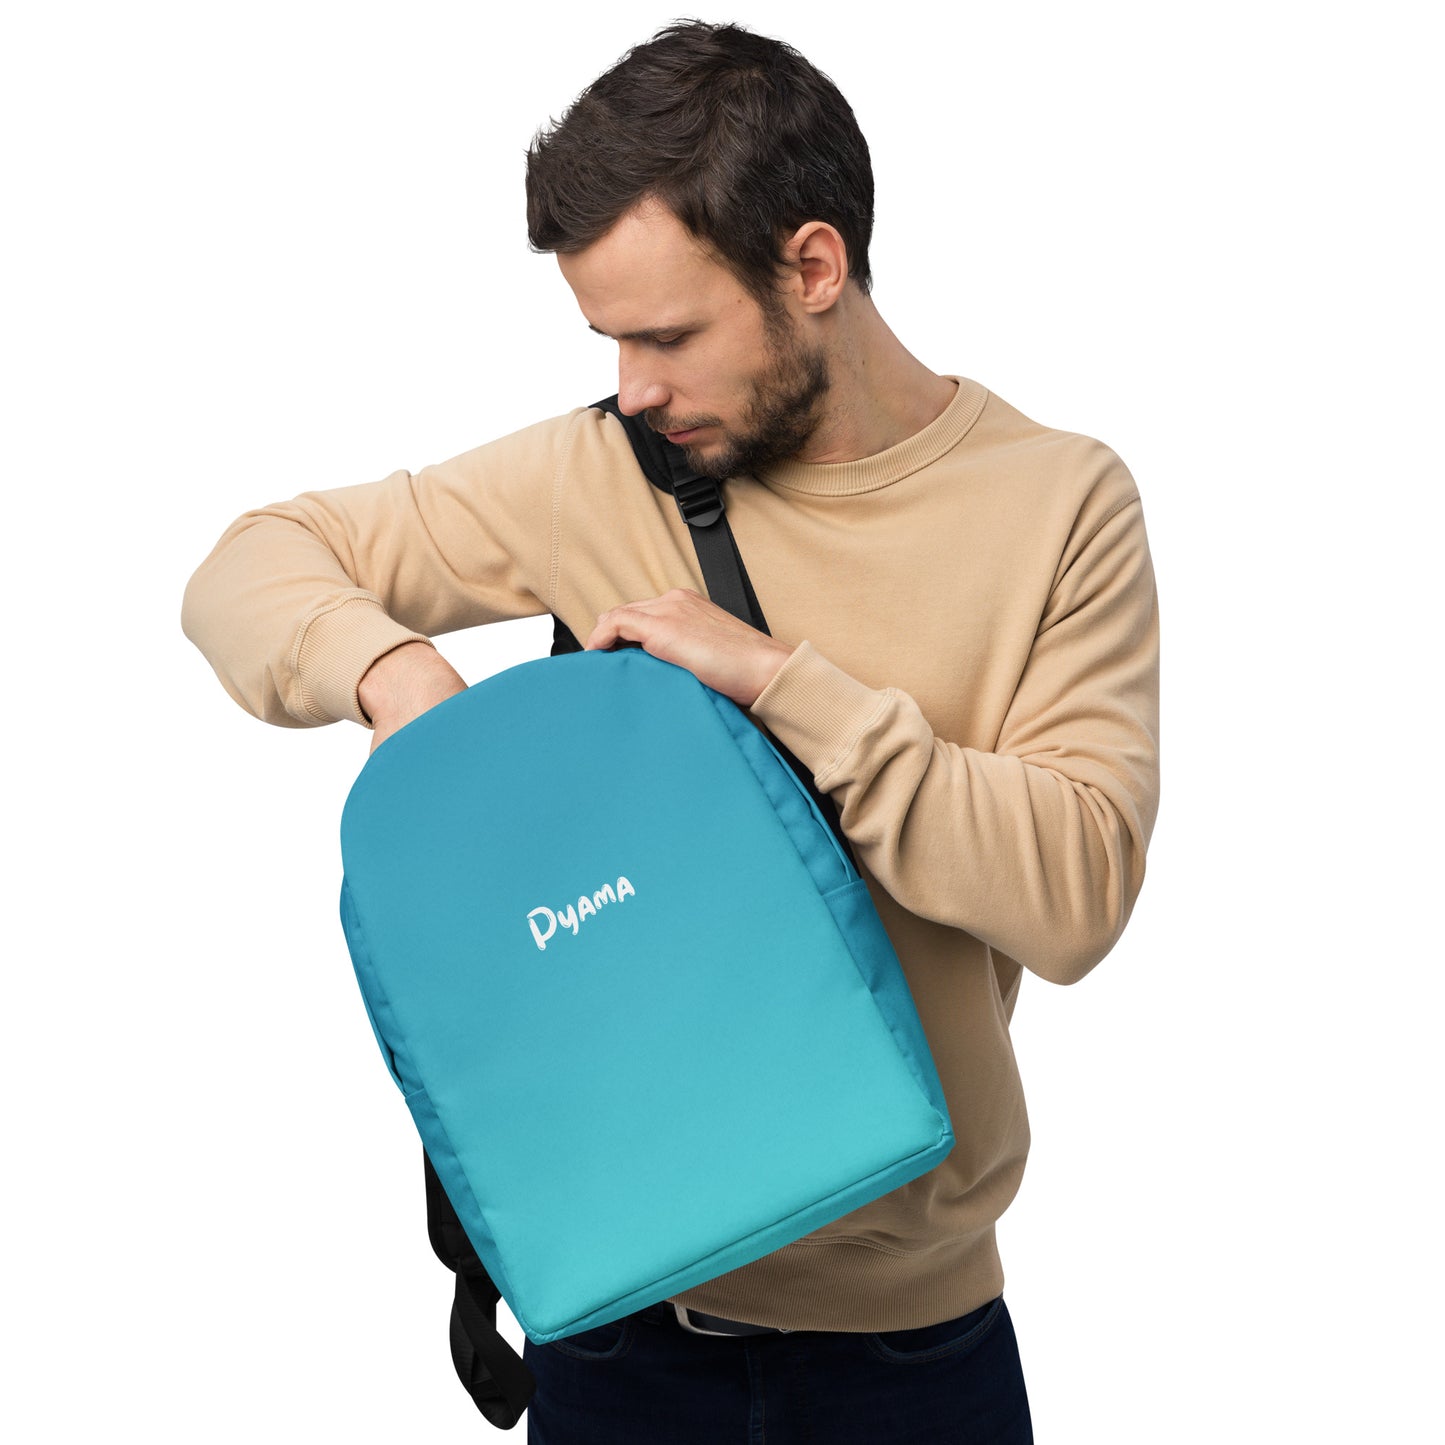 Minimalist Backpack. PYAMA Bleu